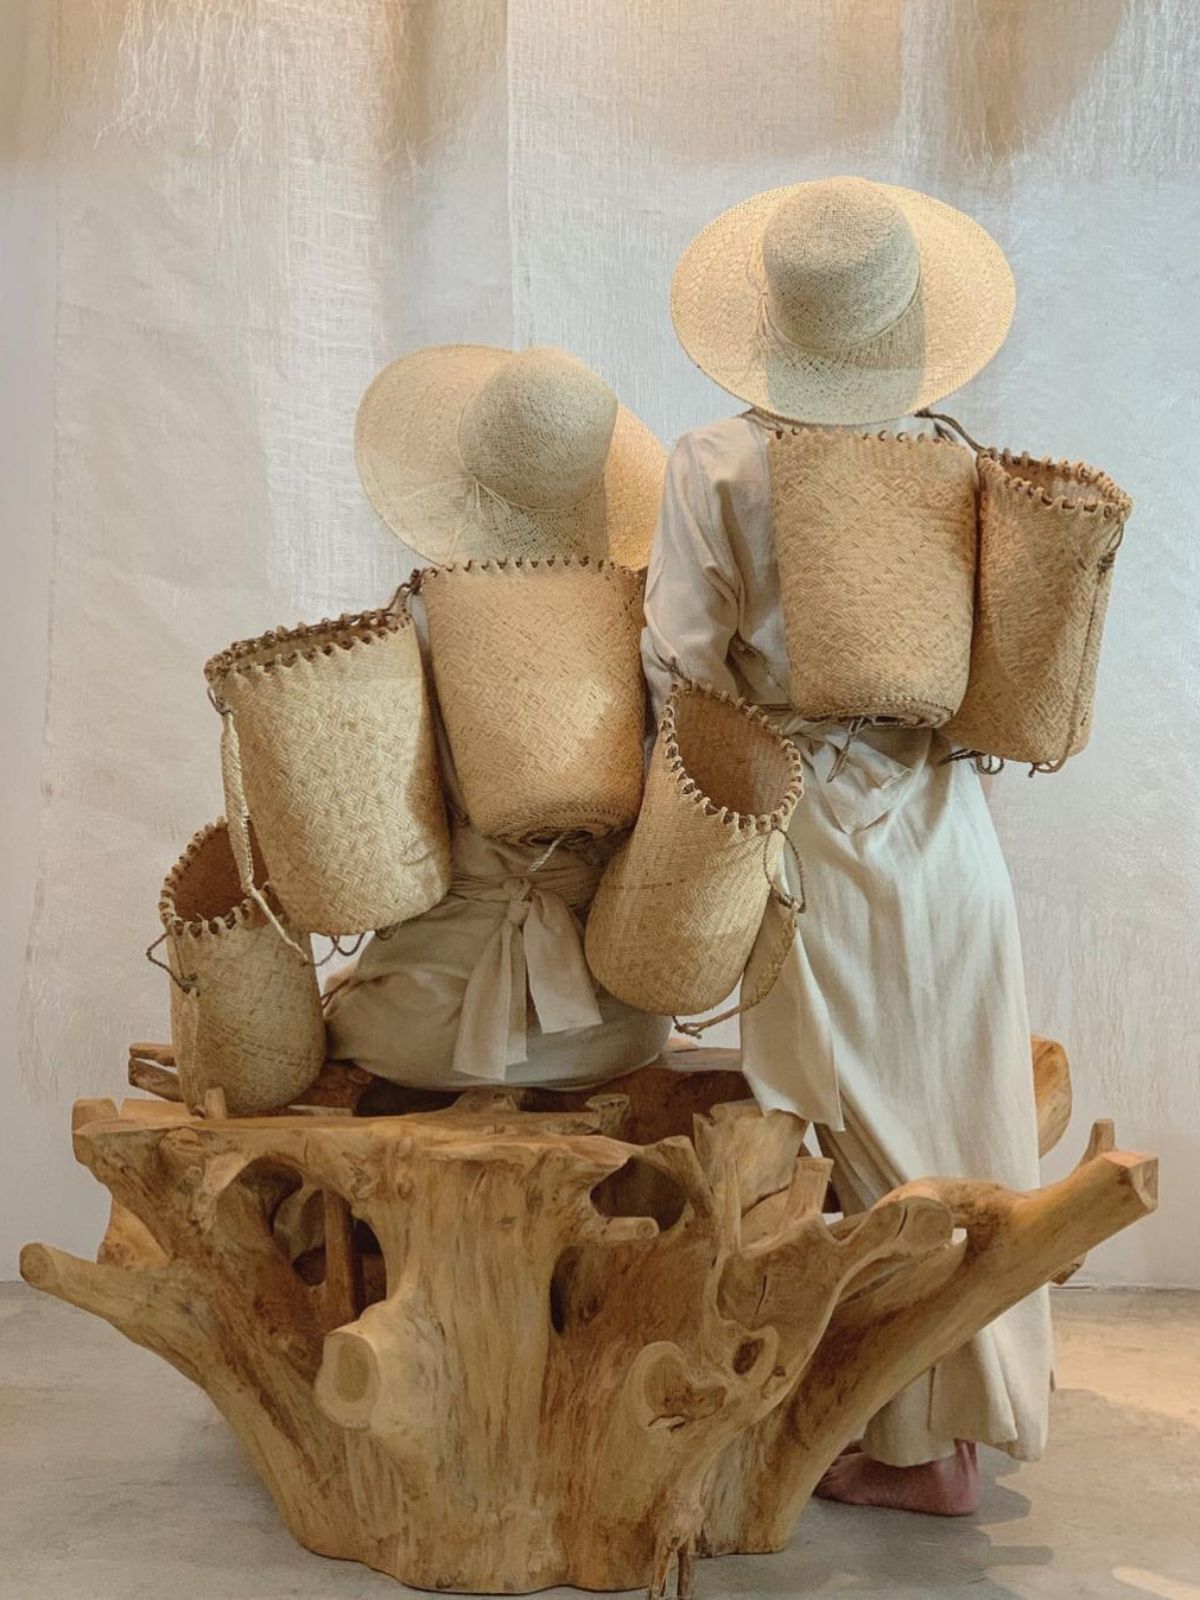 Sculptural Garments Made from Organic Materials - Mono Giraud - The art tree baskets - article on thursd